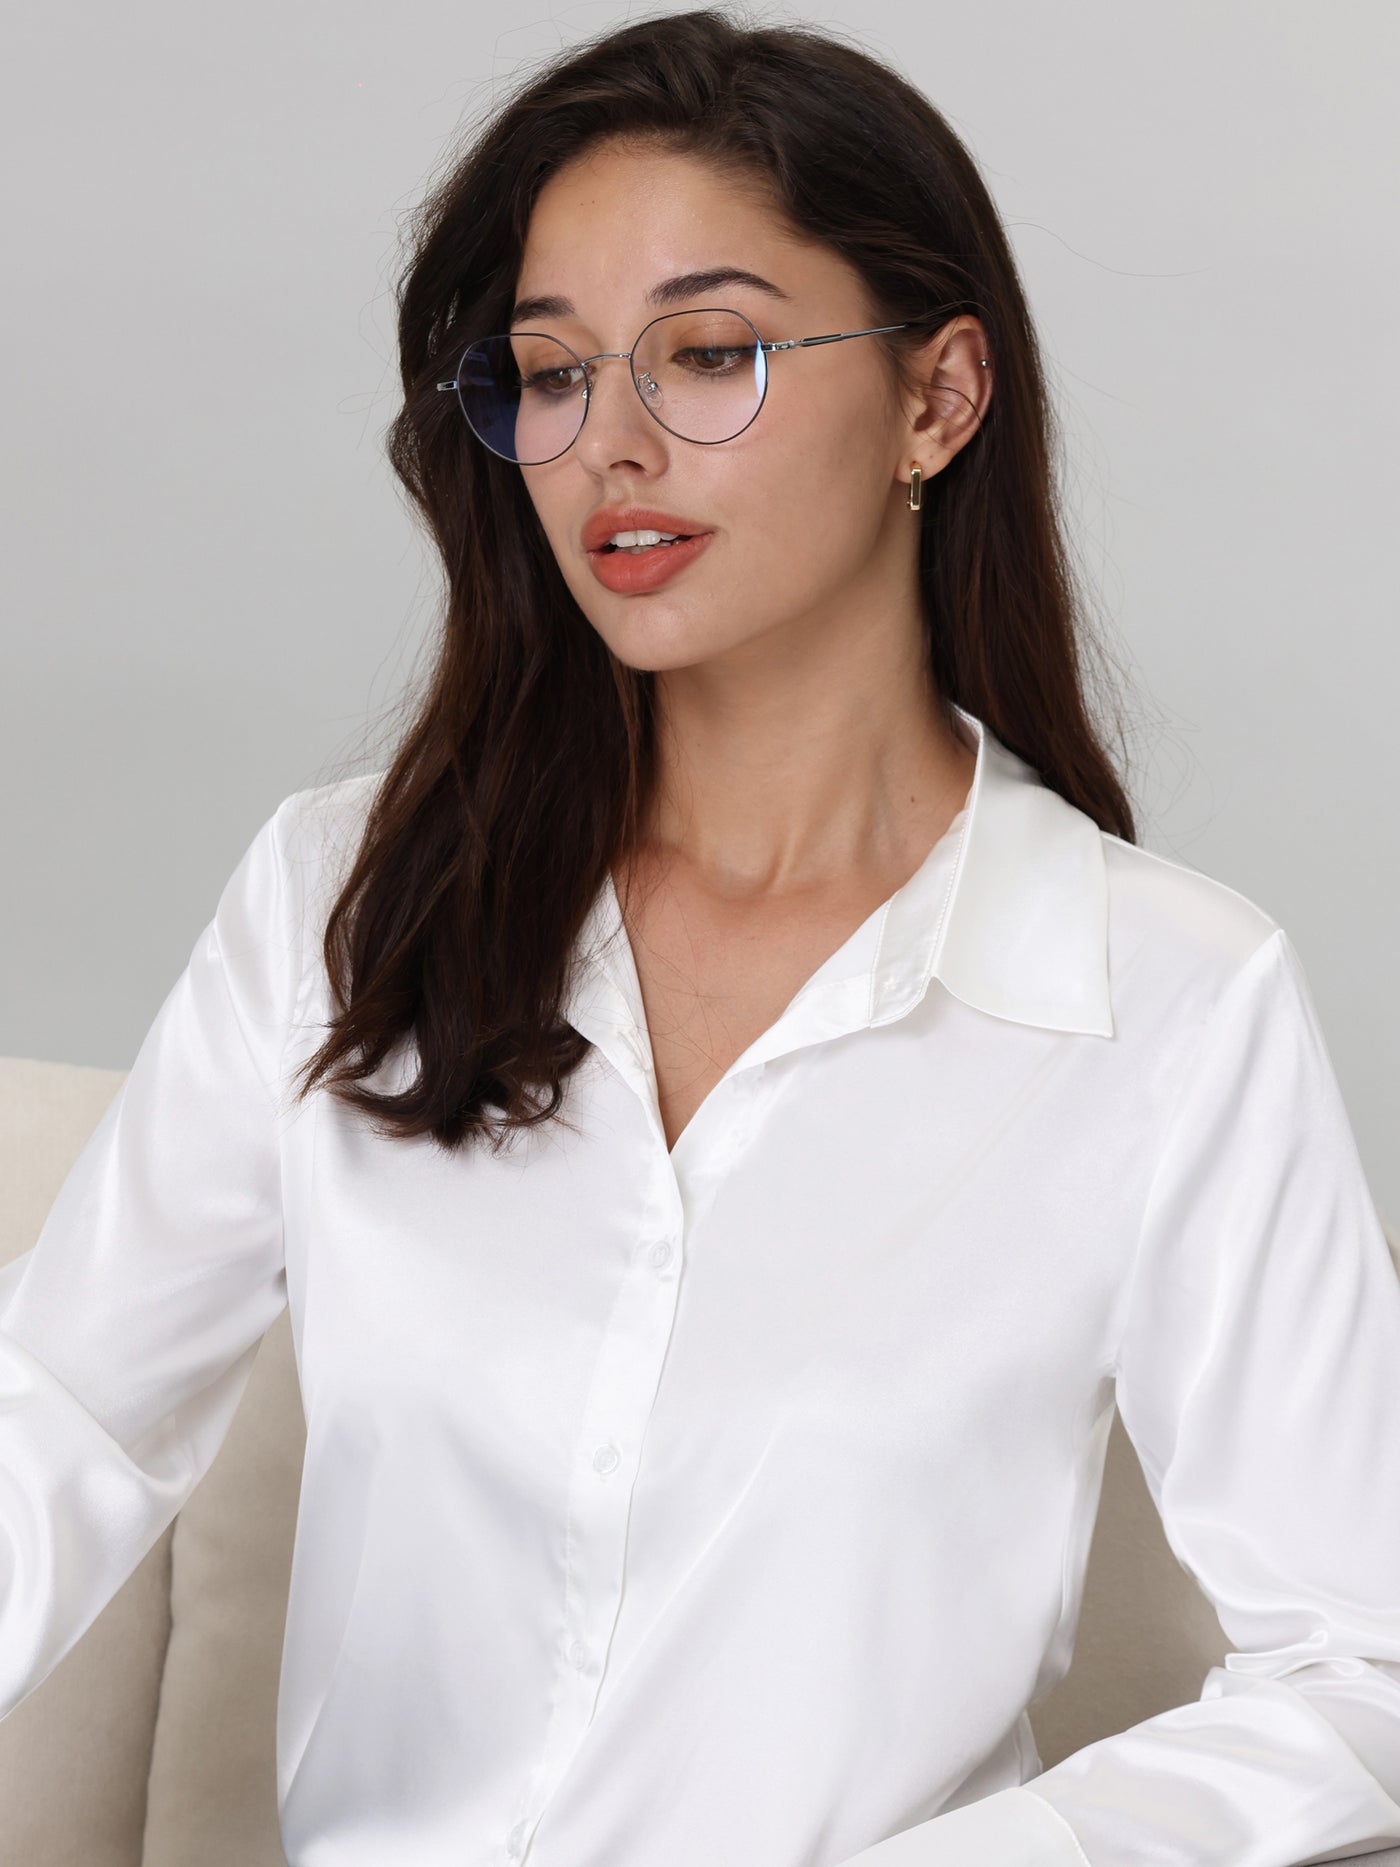 Bublédon Women's Work Shirt Long Sleeves Button Down Silky Satin Blouse